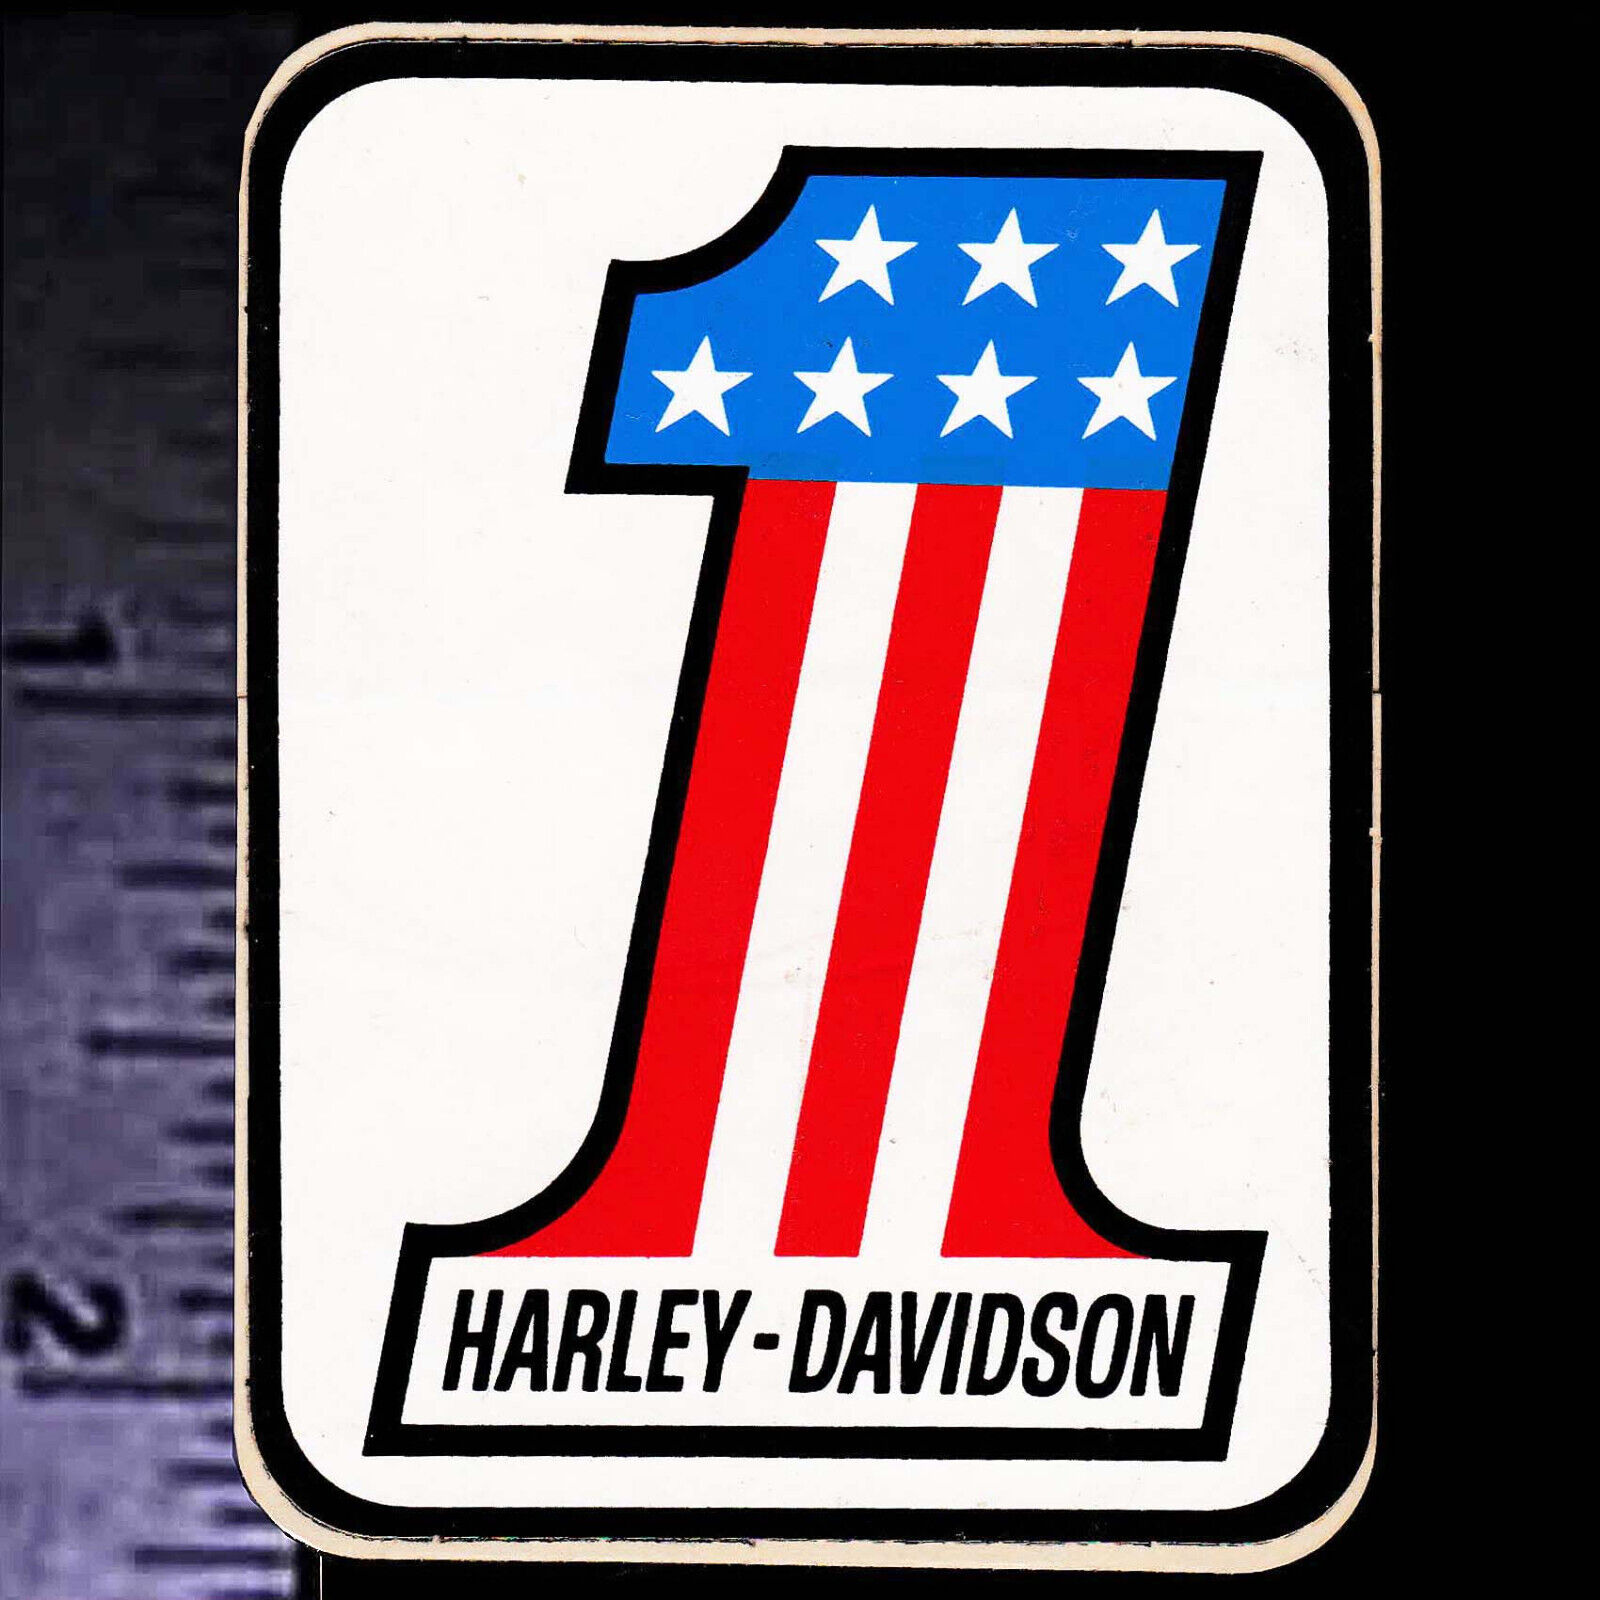 HARLEY DAVIDSON # 1 - Original Vintage 1970’s Racing Motorcycle Decal/Sticker